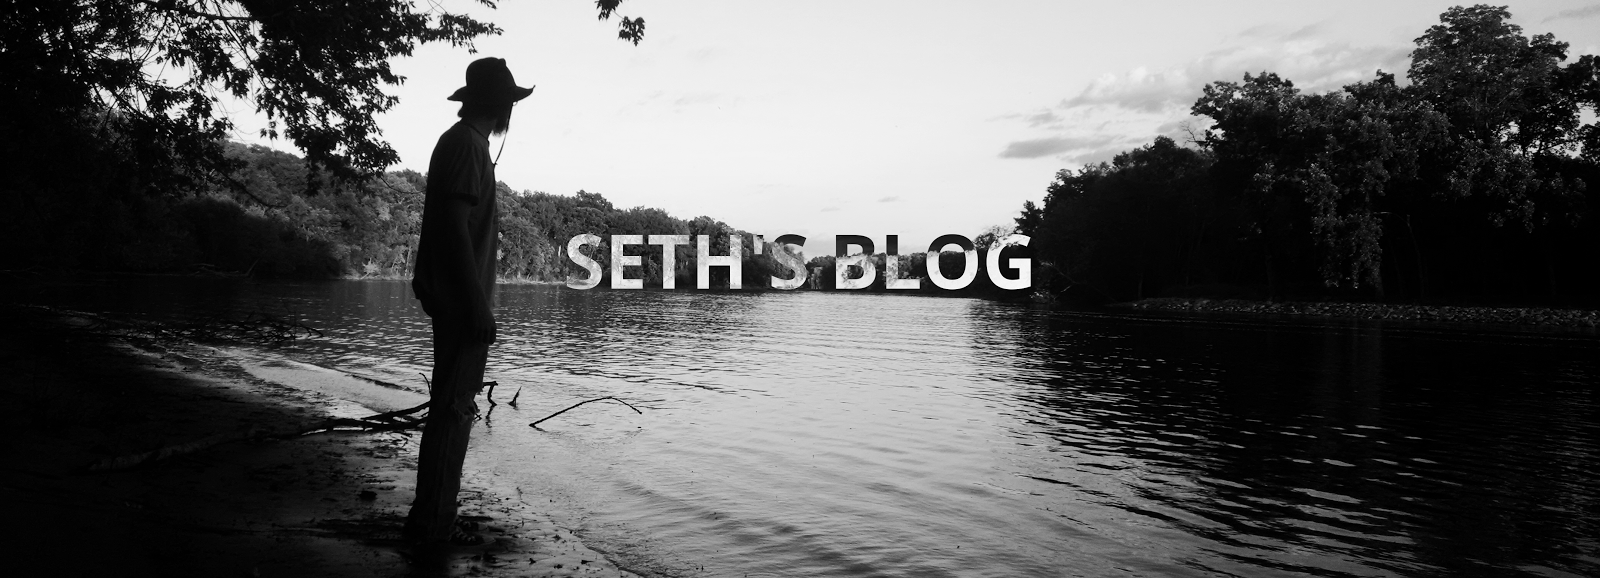 seth's blog